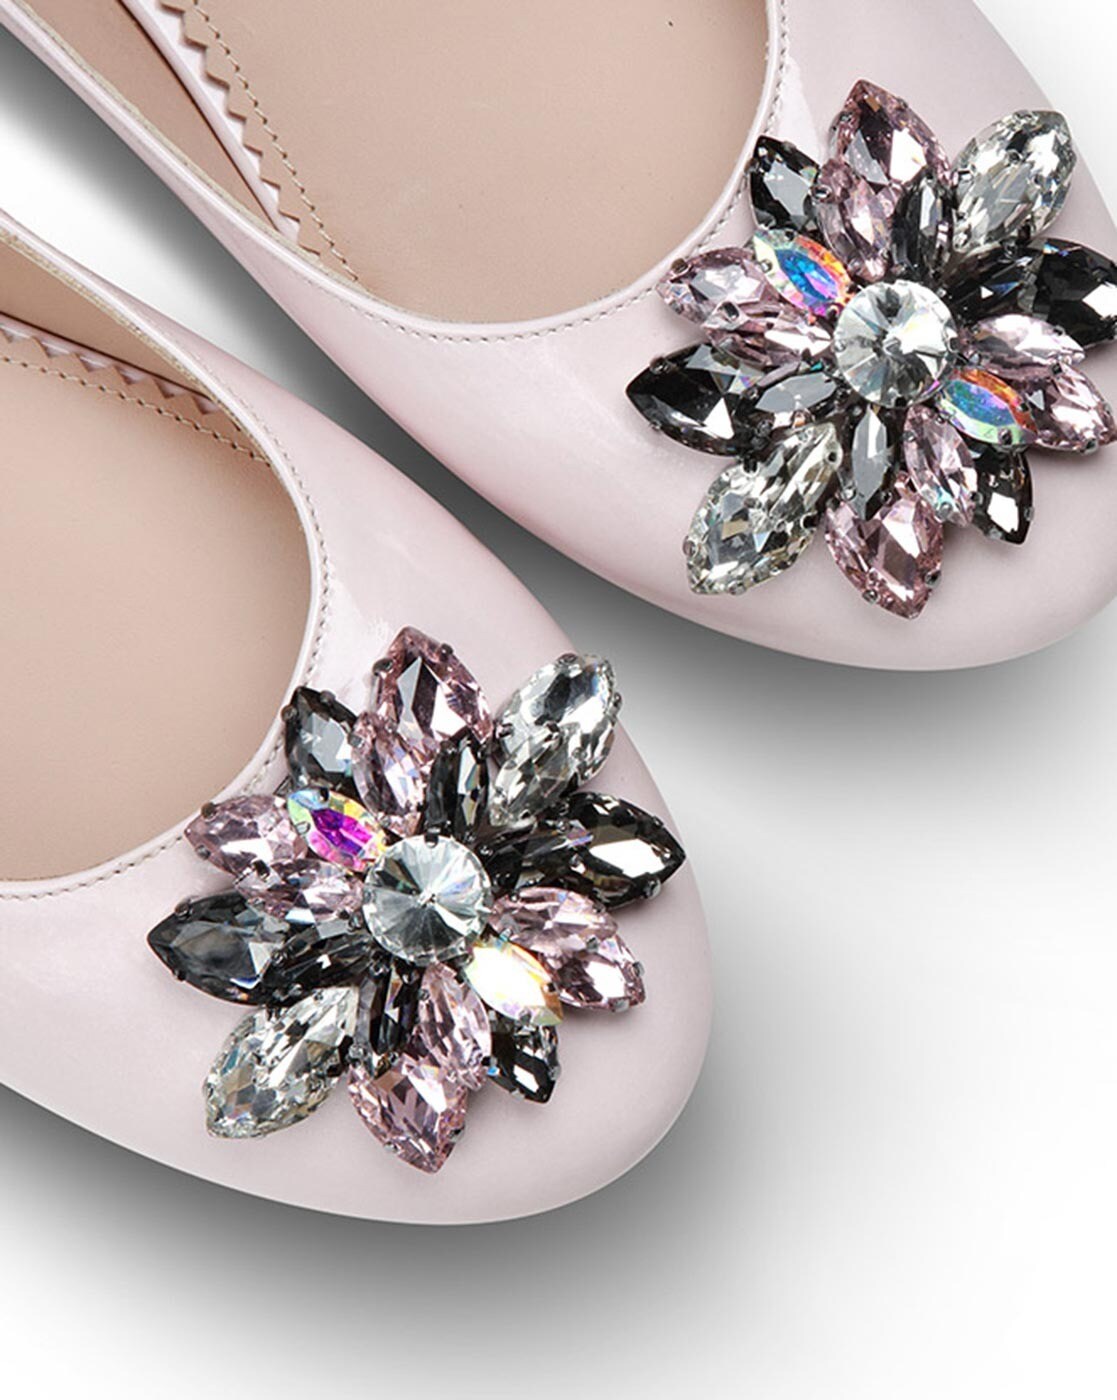 Popi Flat Ballerina - Shoes